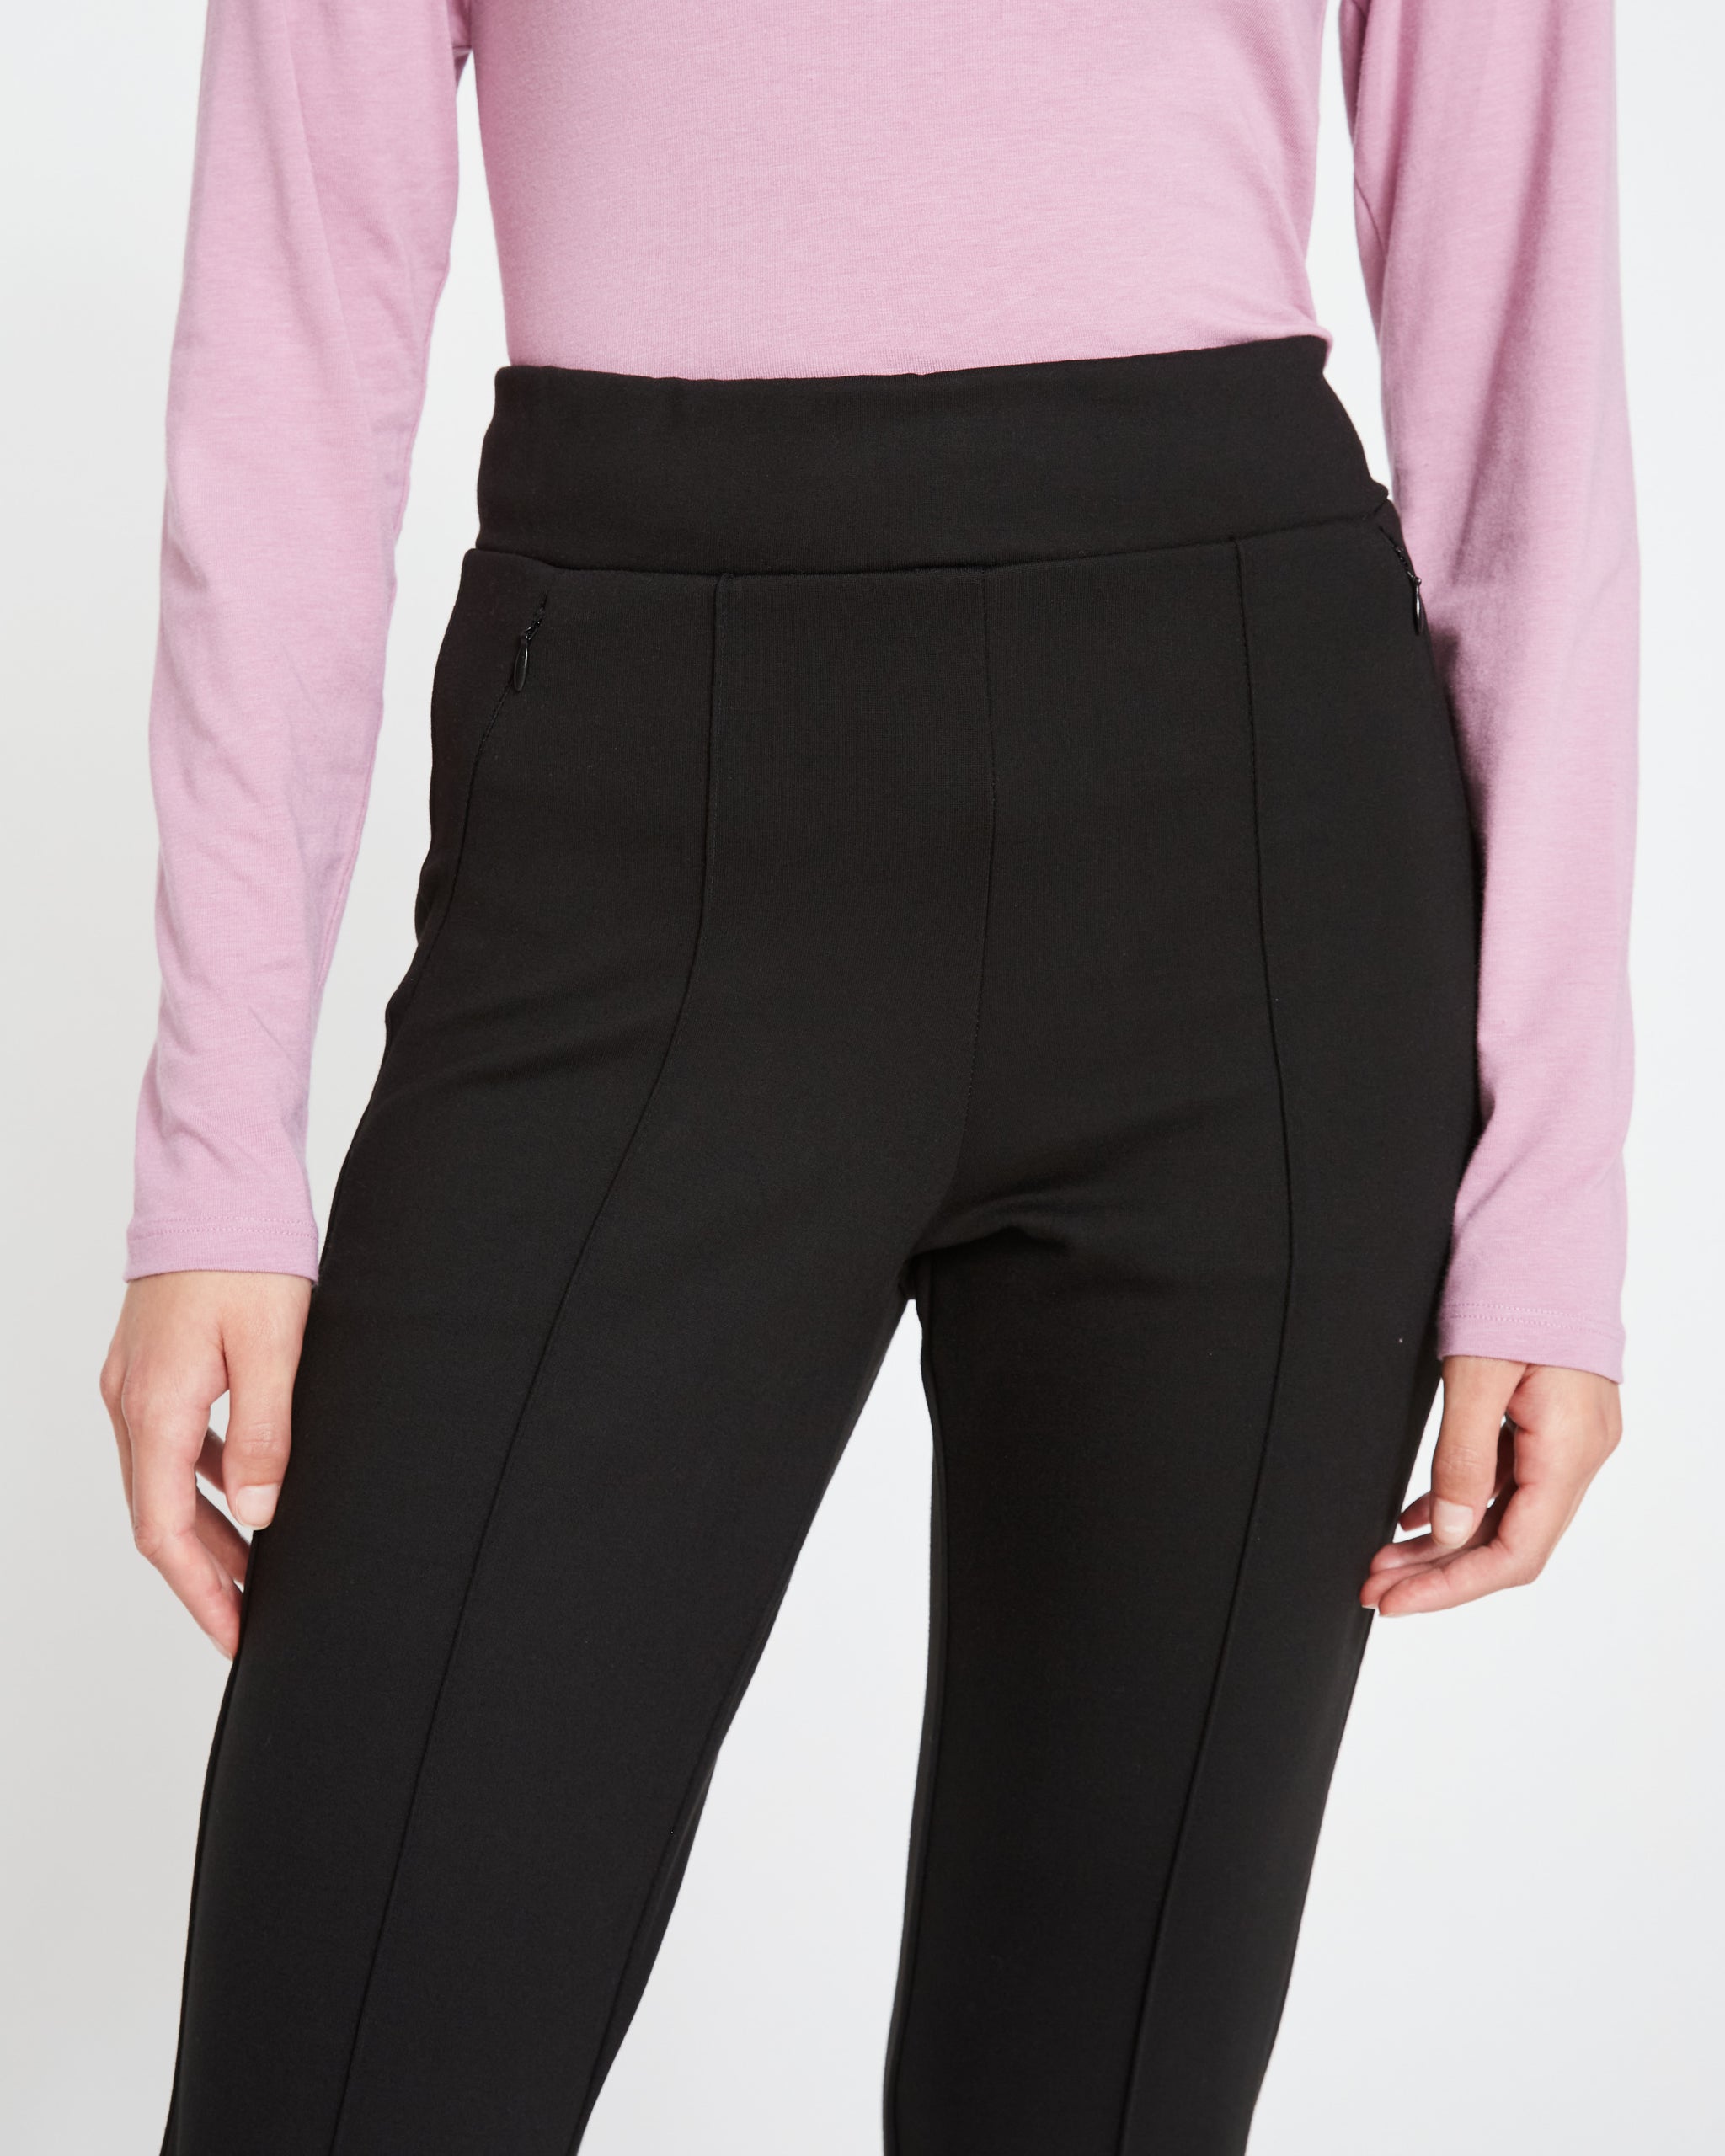 Petaluma Pintuck Pants Standard Fit - Eclipse Black